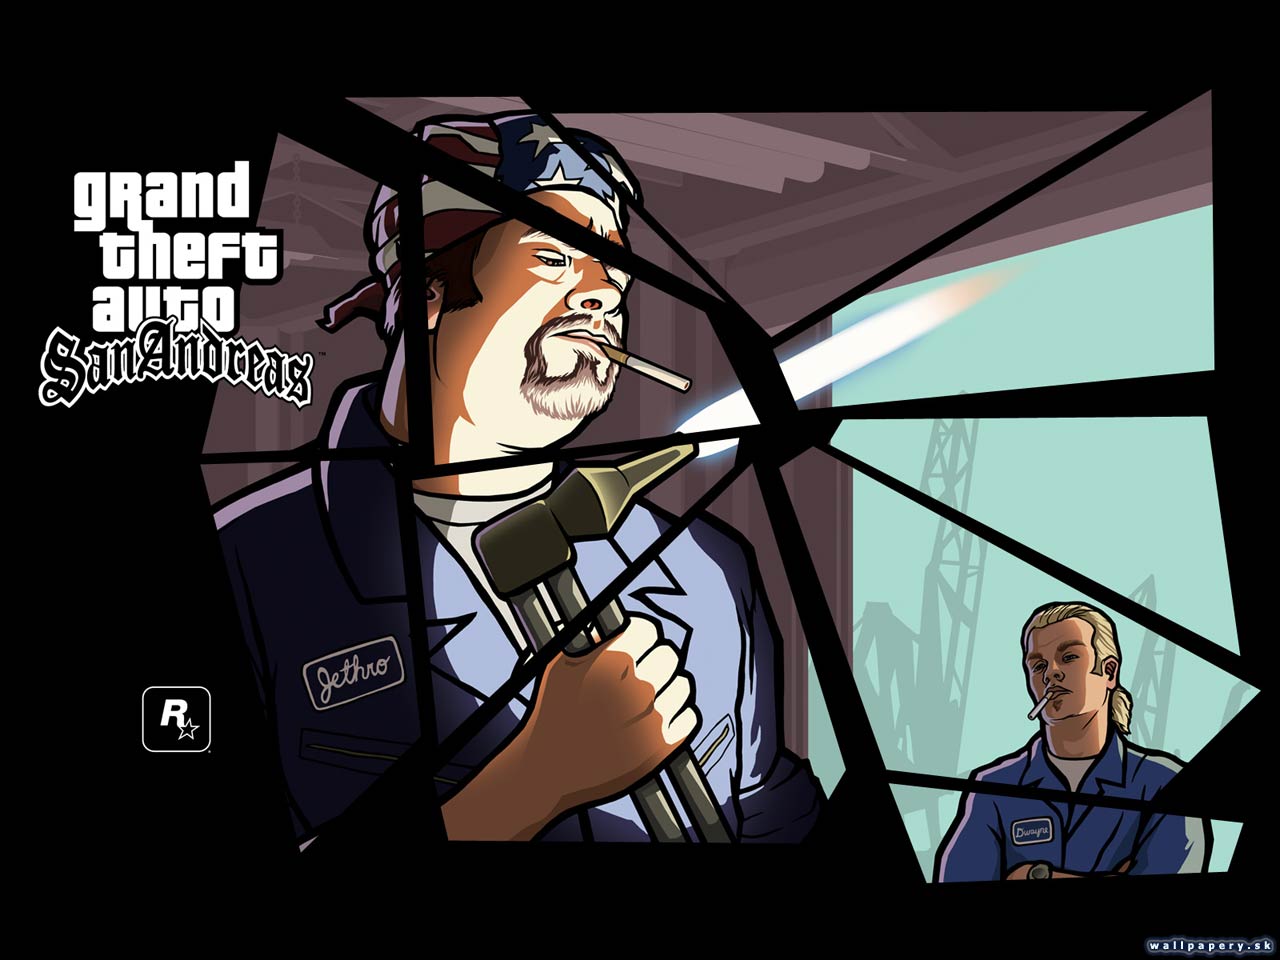 Grand Theft Auto: San Andreas - wallpaper 51